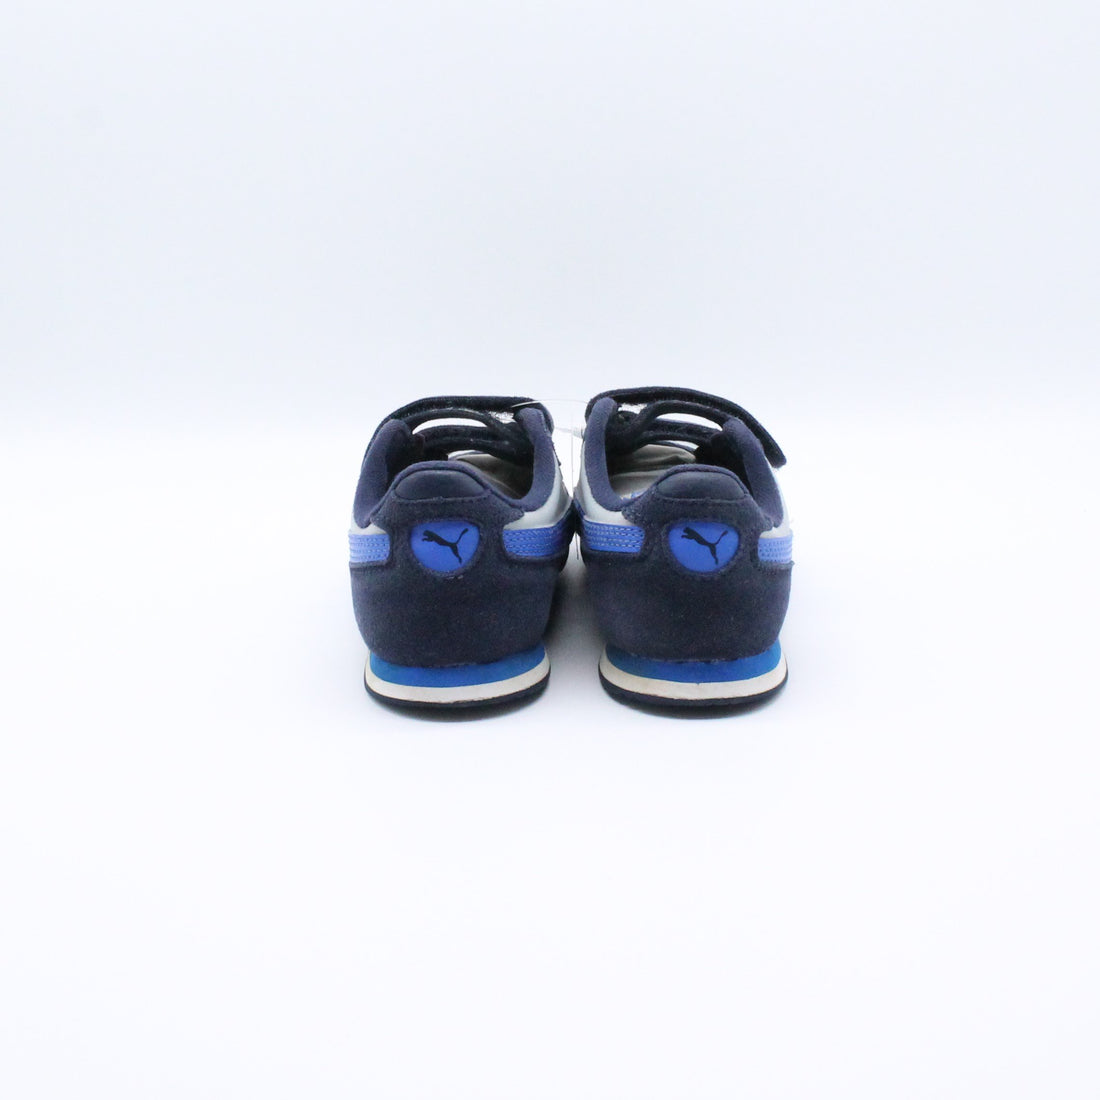 Schuhe - Halbschuhe - Puma - 29 - blau/grau - Klett - Boy